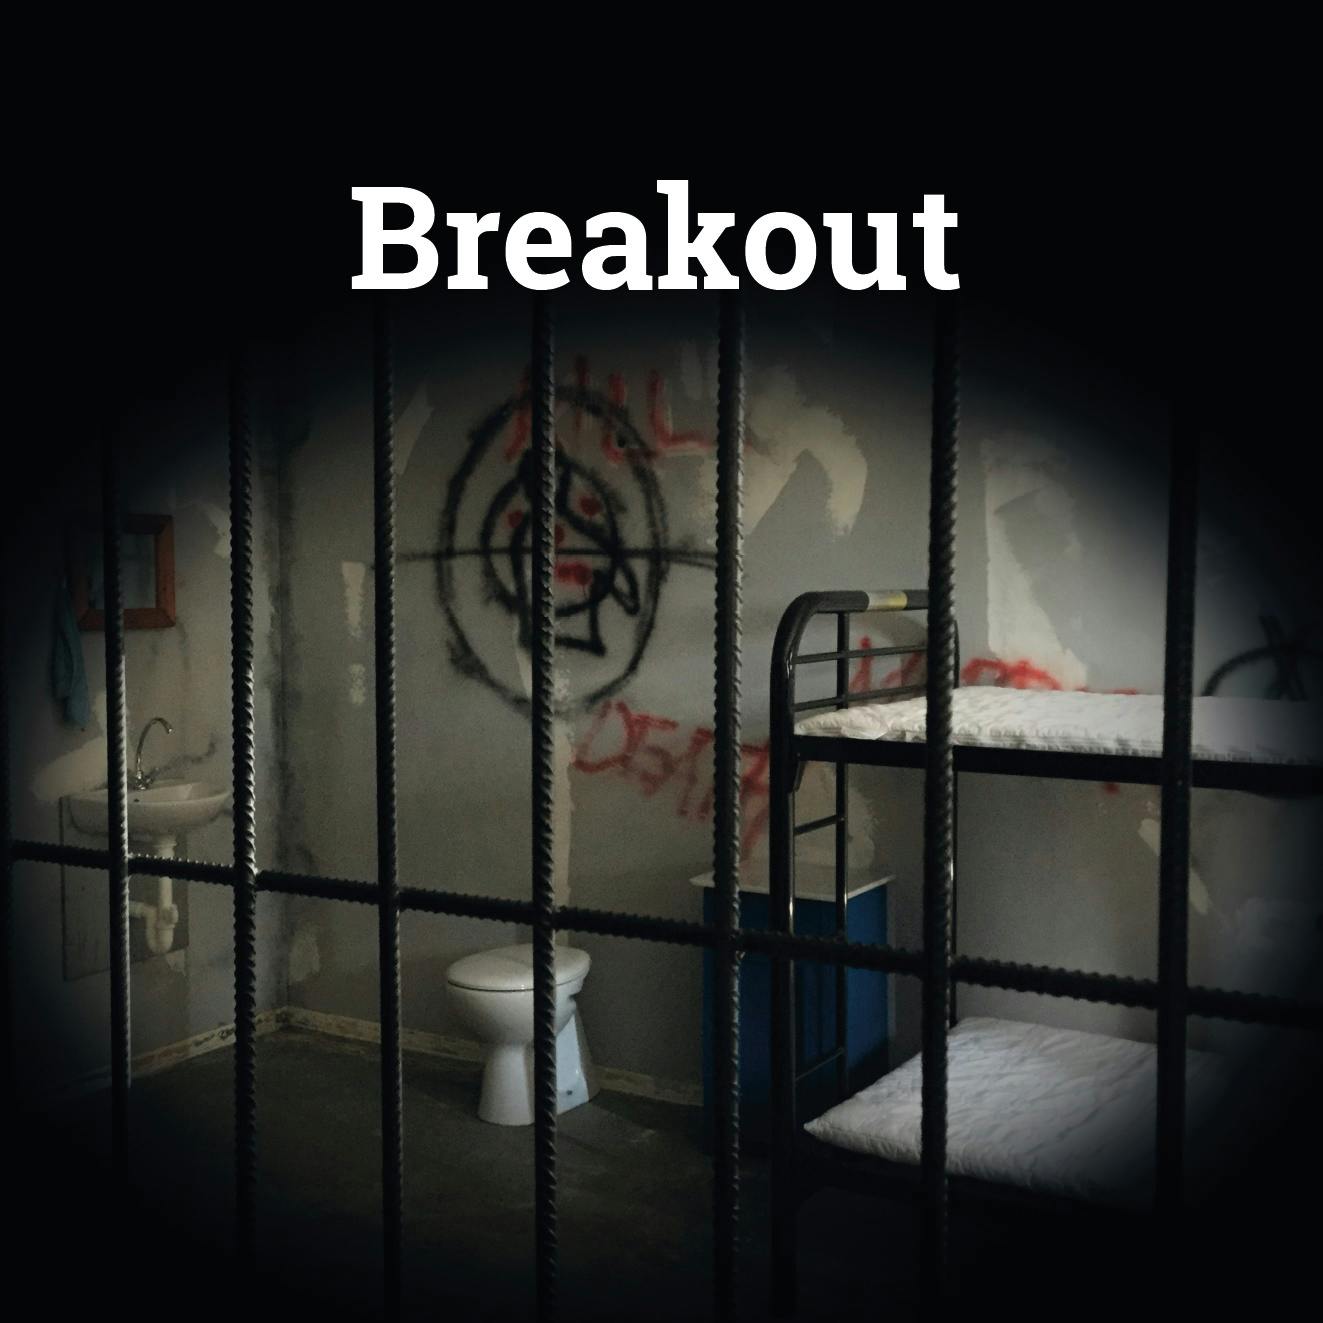 Escape Room game "Breakout" in Saarbrücken Musement